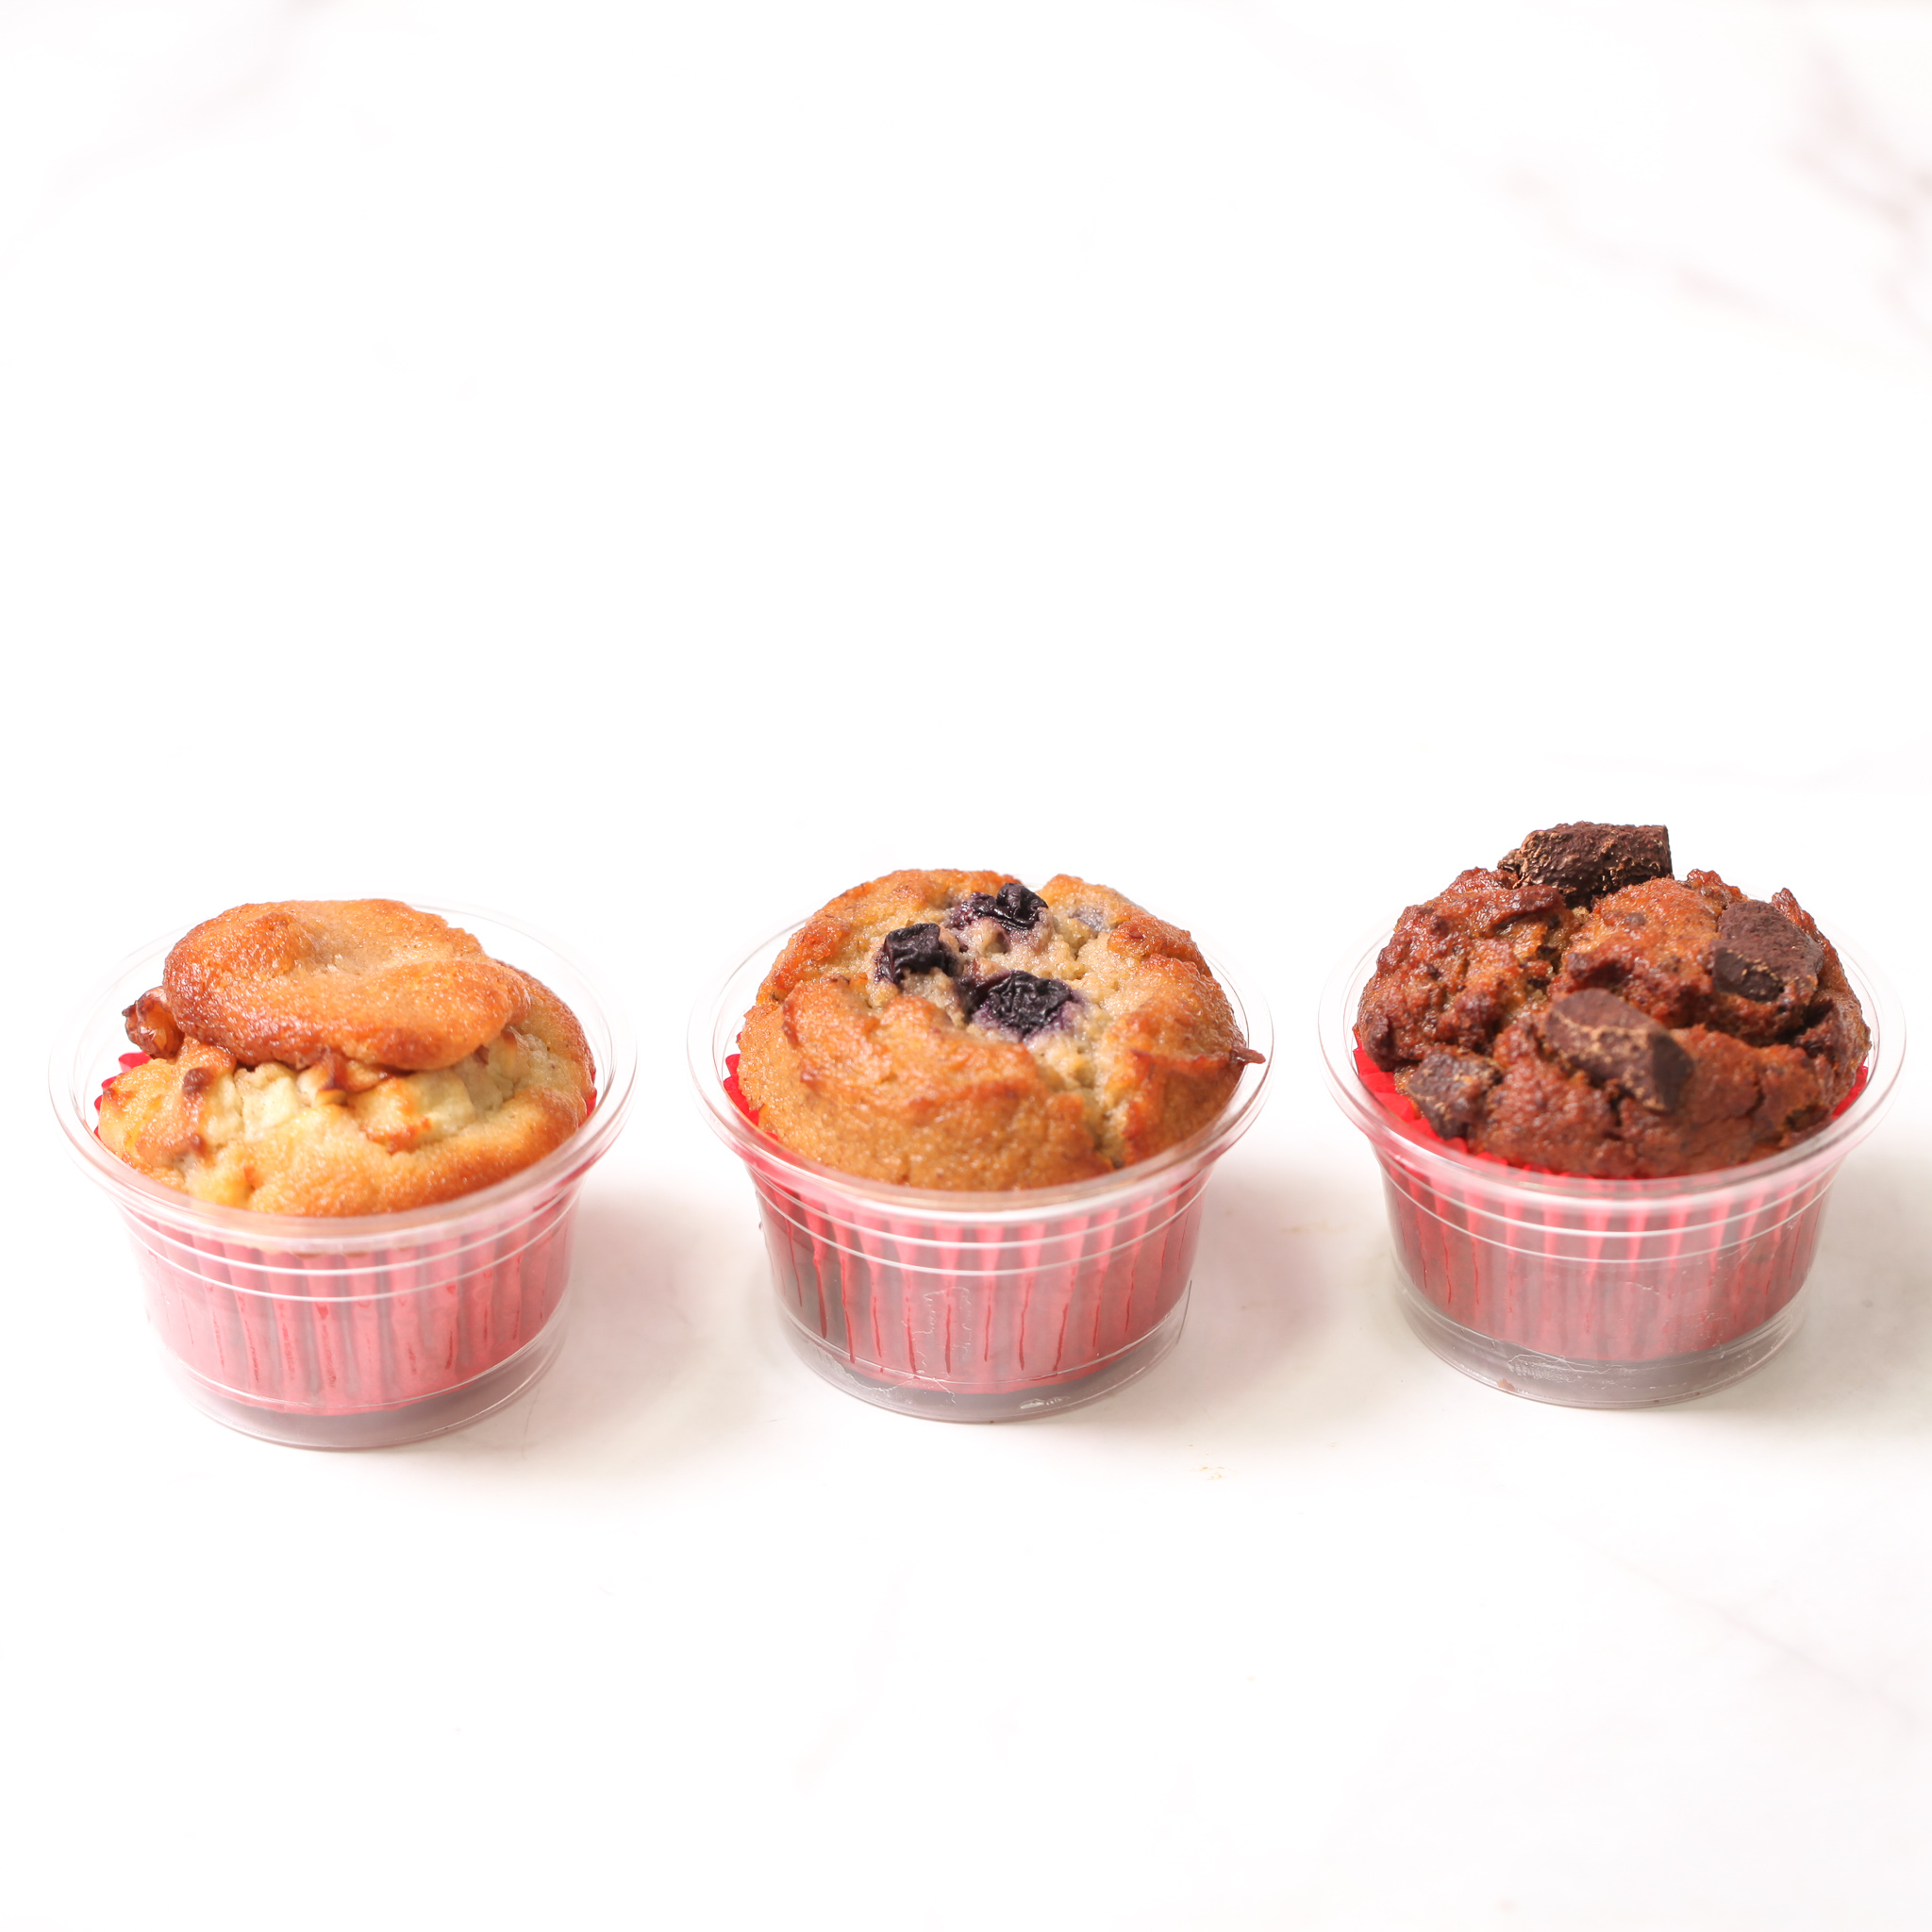 Gluten-free muffins: Sampler 3-pack